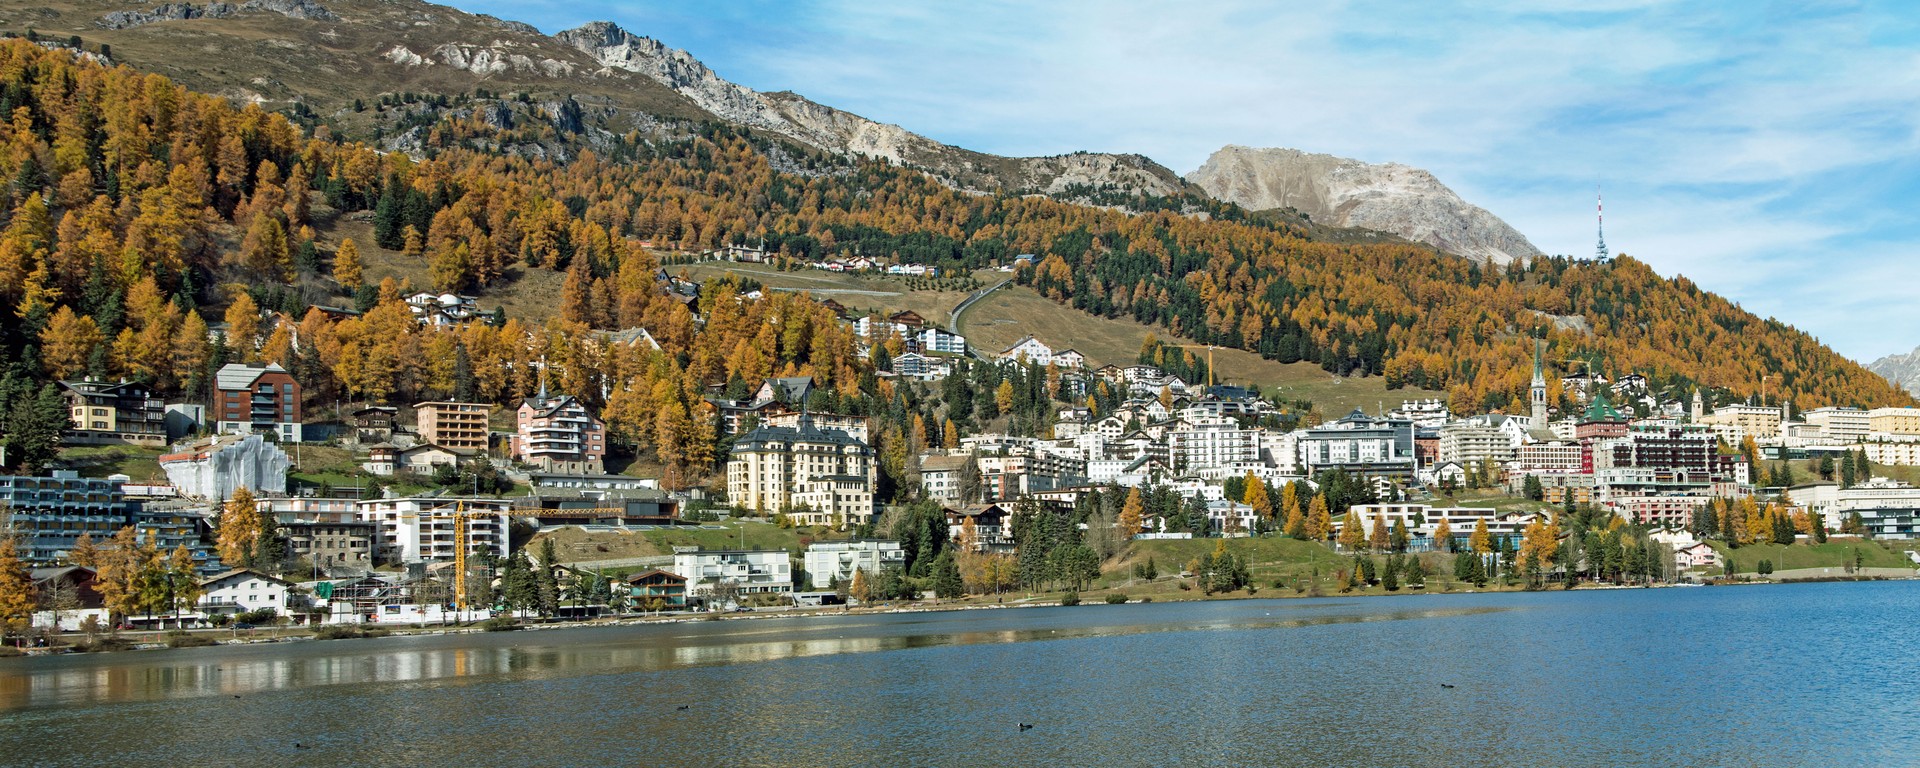 Herbst im Engadin St. Moritz